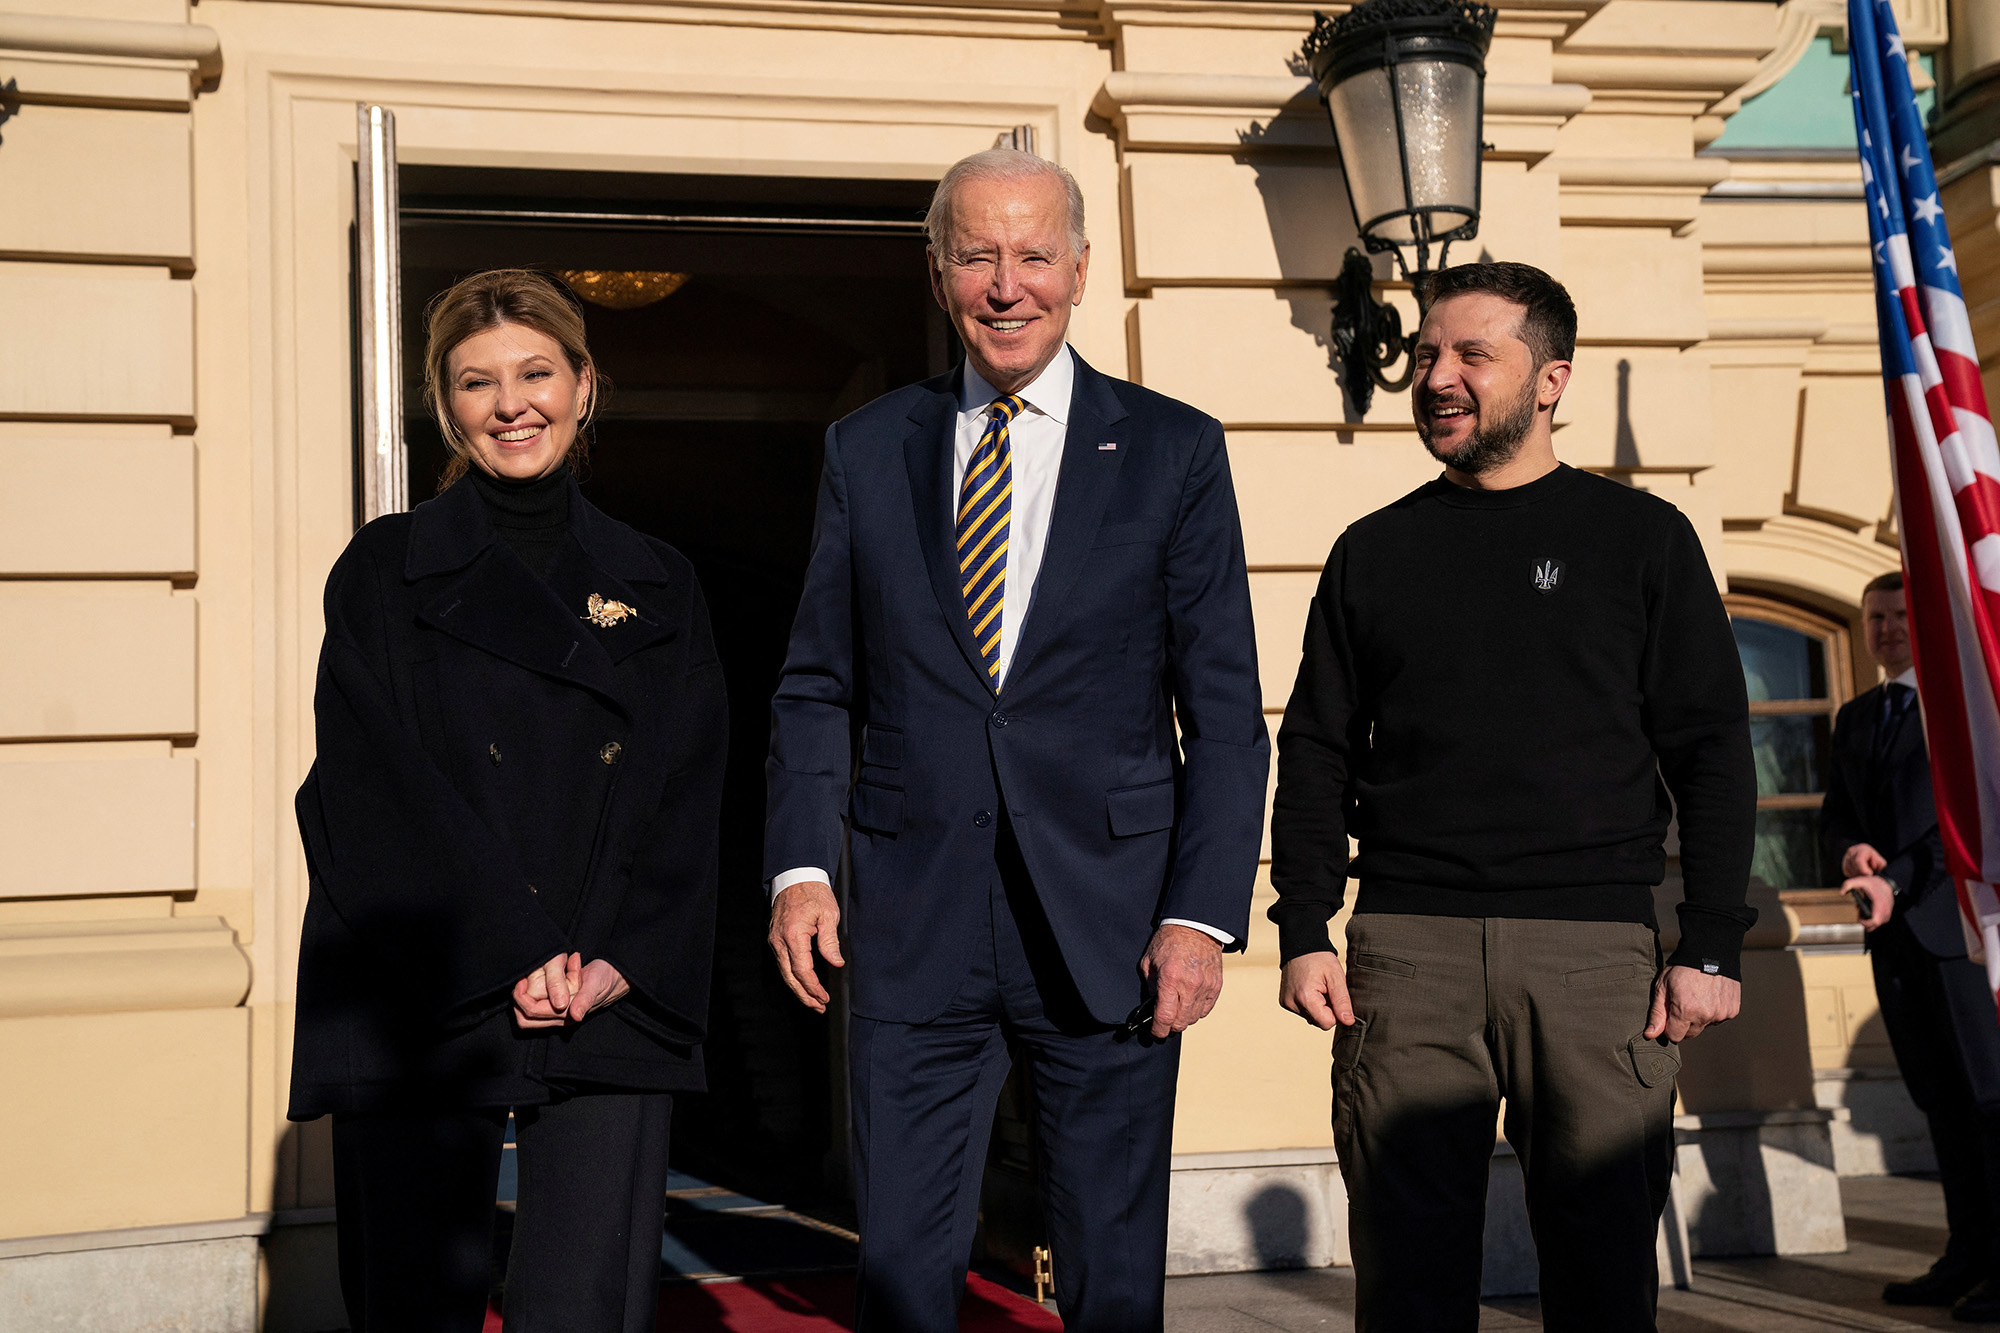 US President Joe Biden meets with Ukrainian President Volodymyr Zelensky and Olena Zelenska at Mariinsky Palace during an unannounced visit in Kyiv, Ukraine, on February 20.